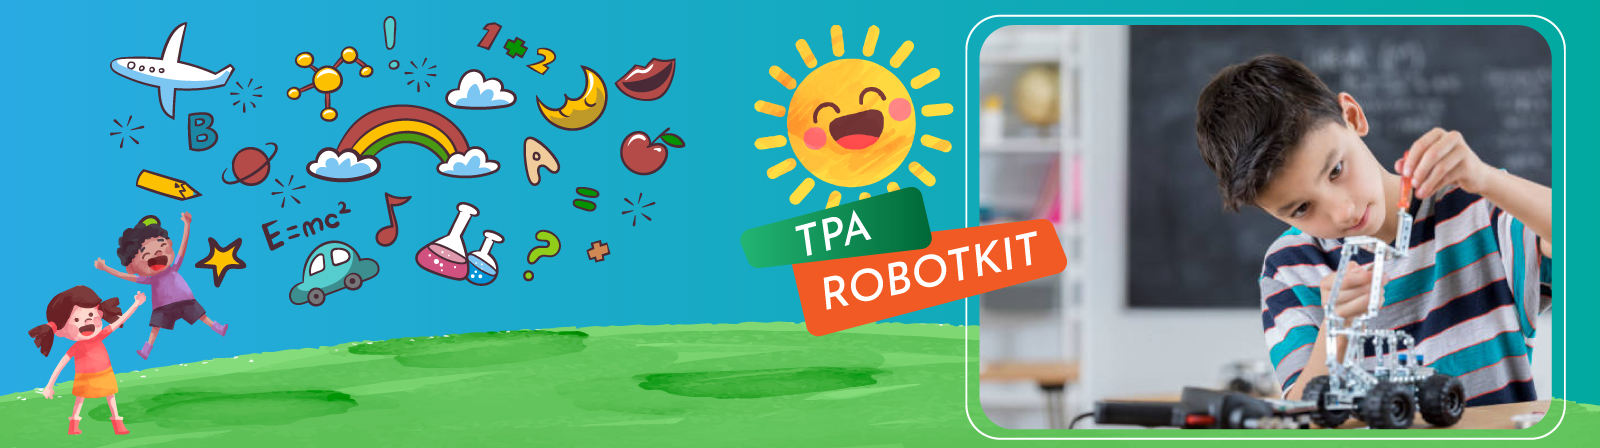 Robotkit-new